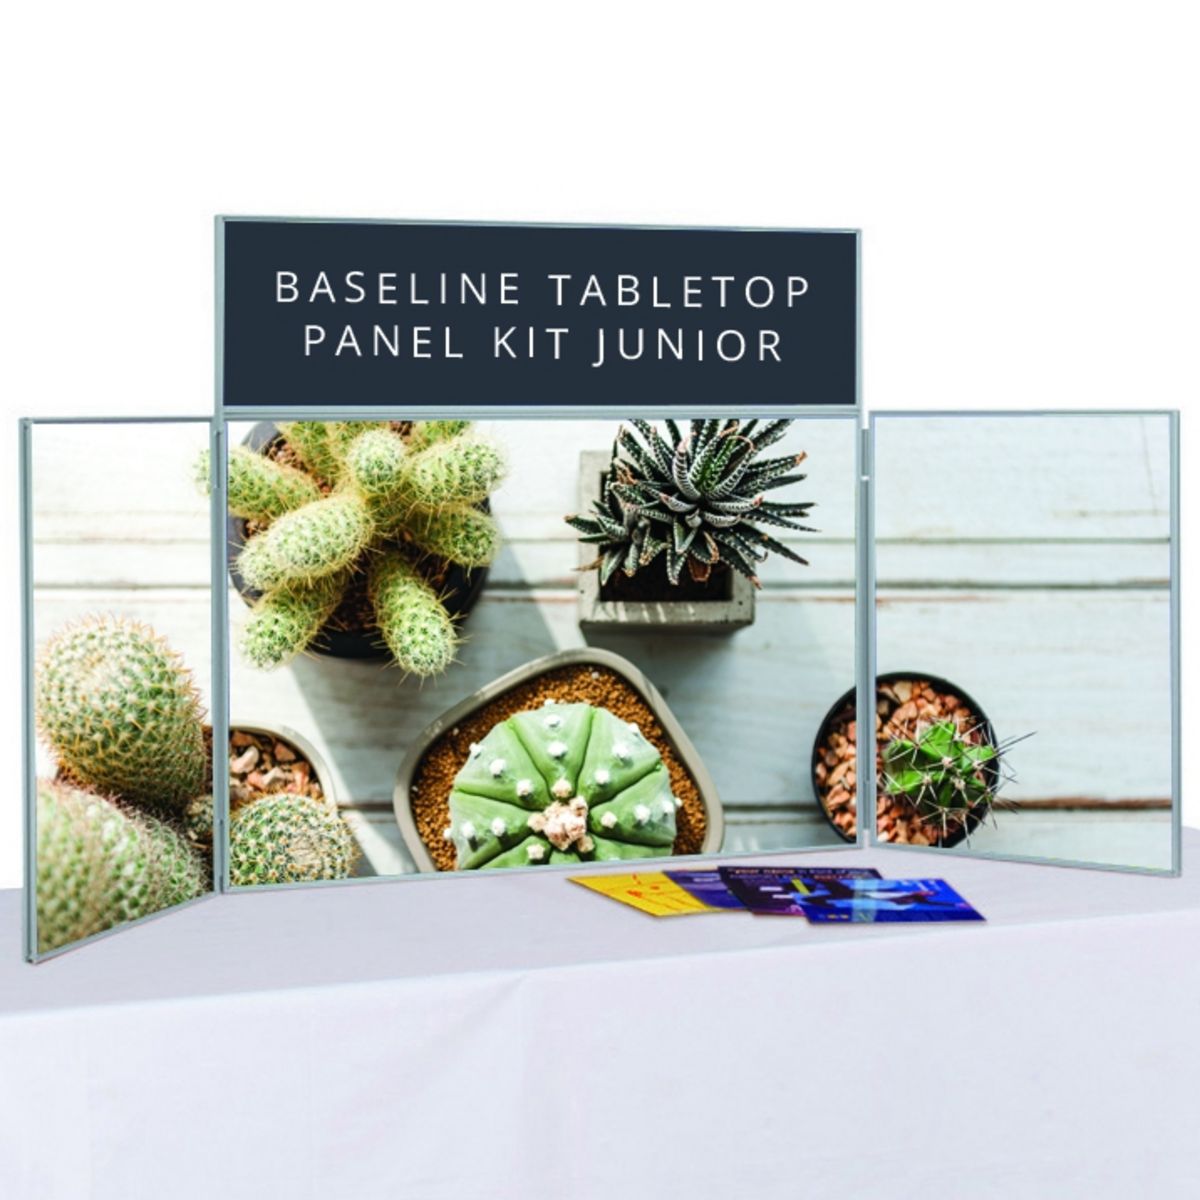 baseline-tabletop-panel-kit-2-main-76980.jpg